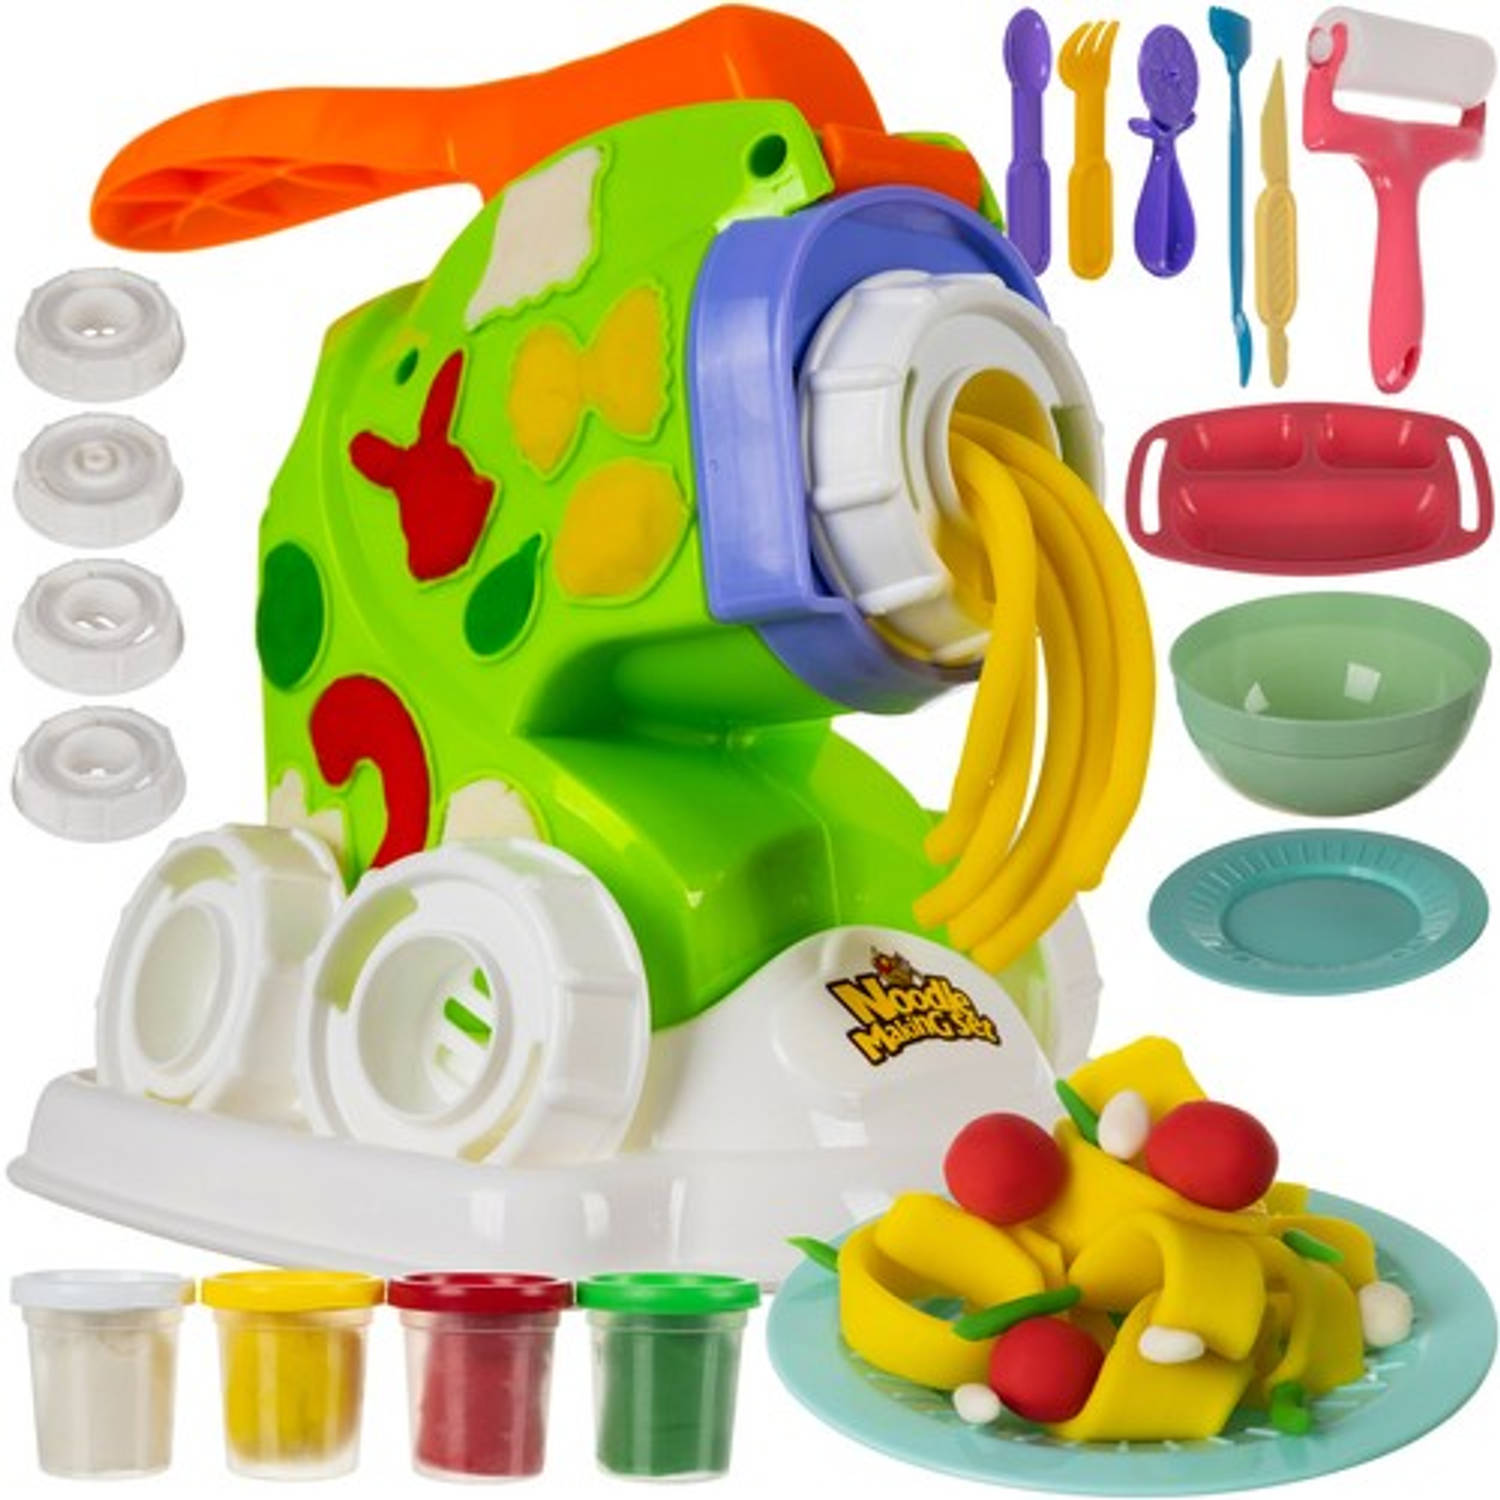 Kruzzel klei set noodle maken - Colour clay diy noodle maker set met 4 kleuren klei - Inclusief pastamachine - STEM speelgoed